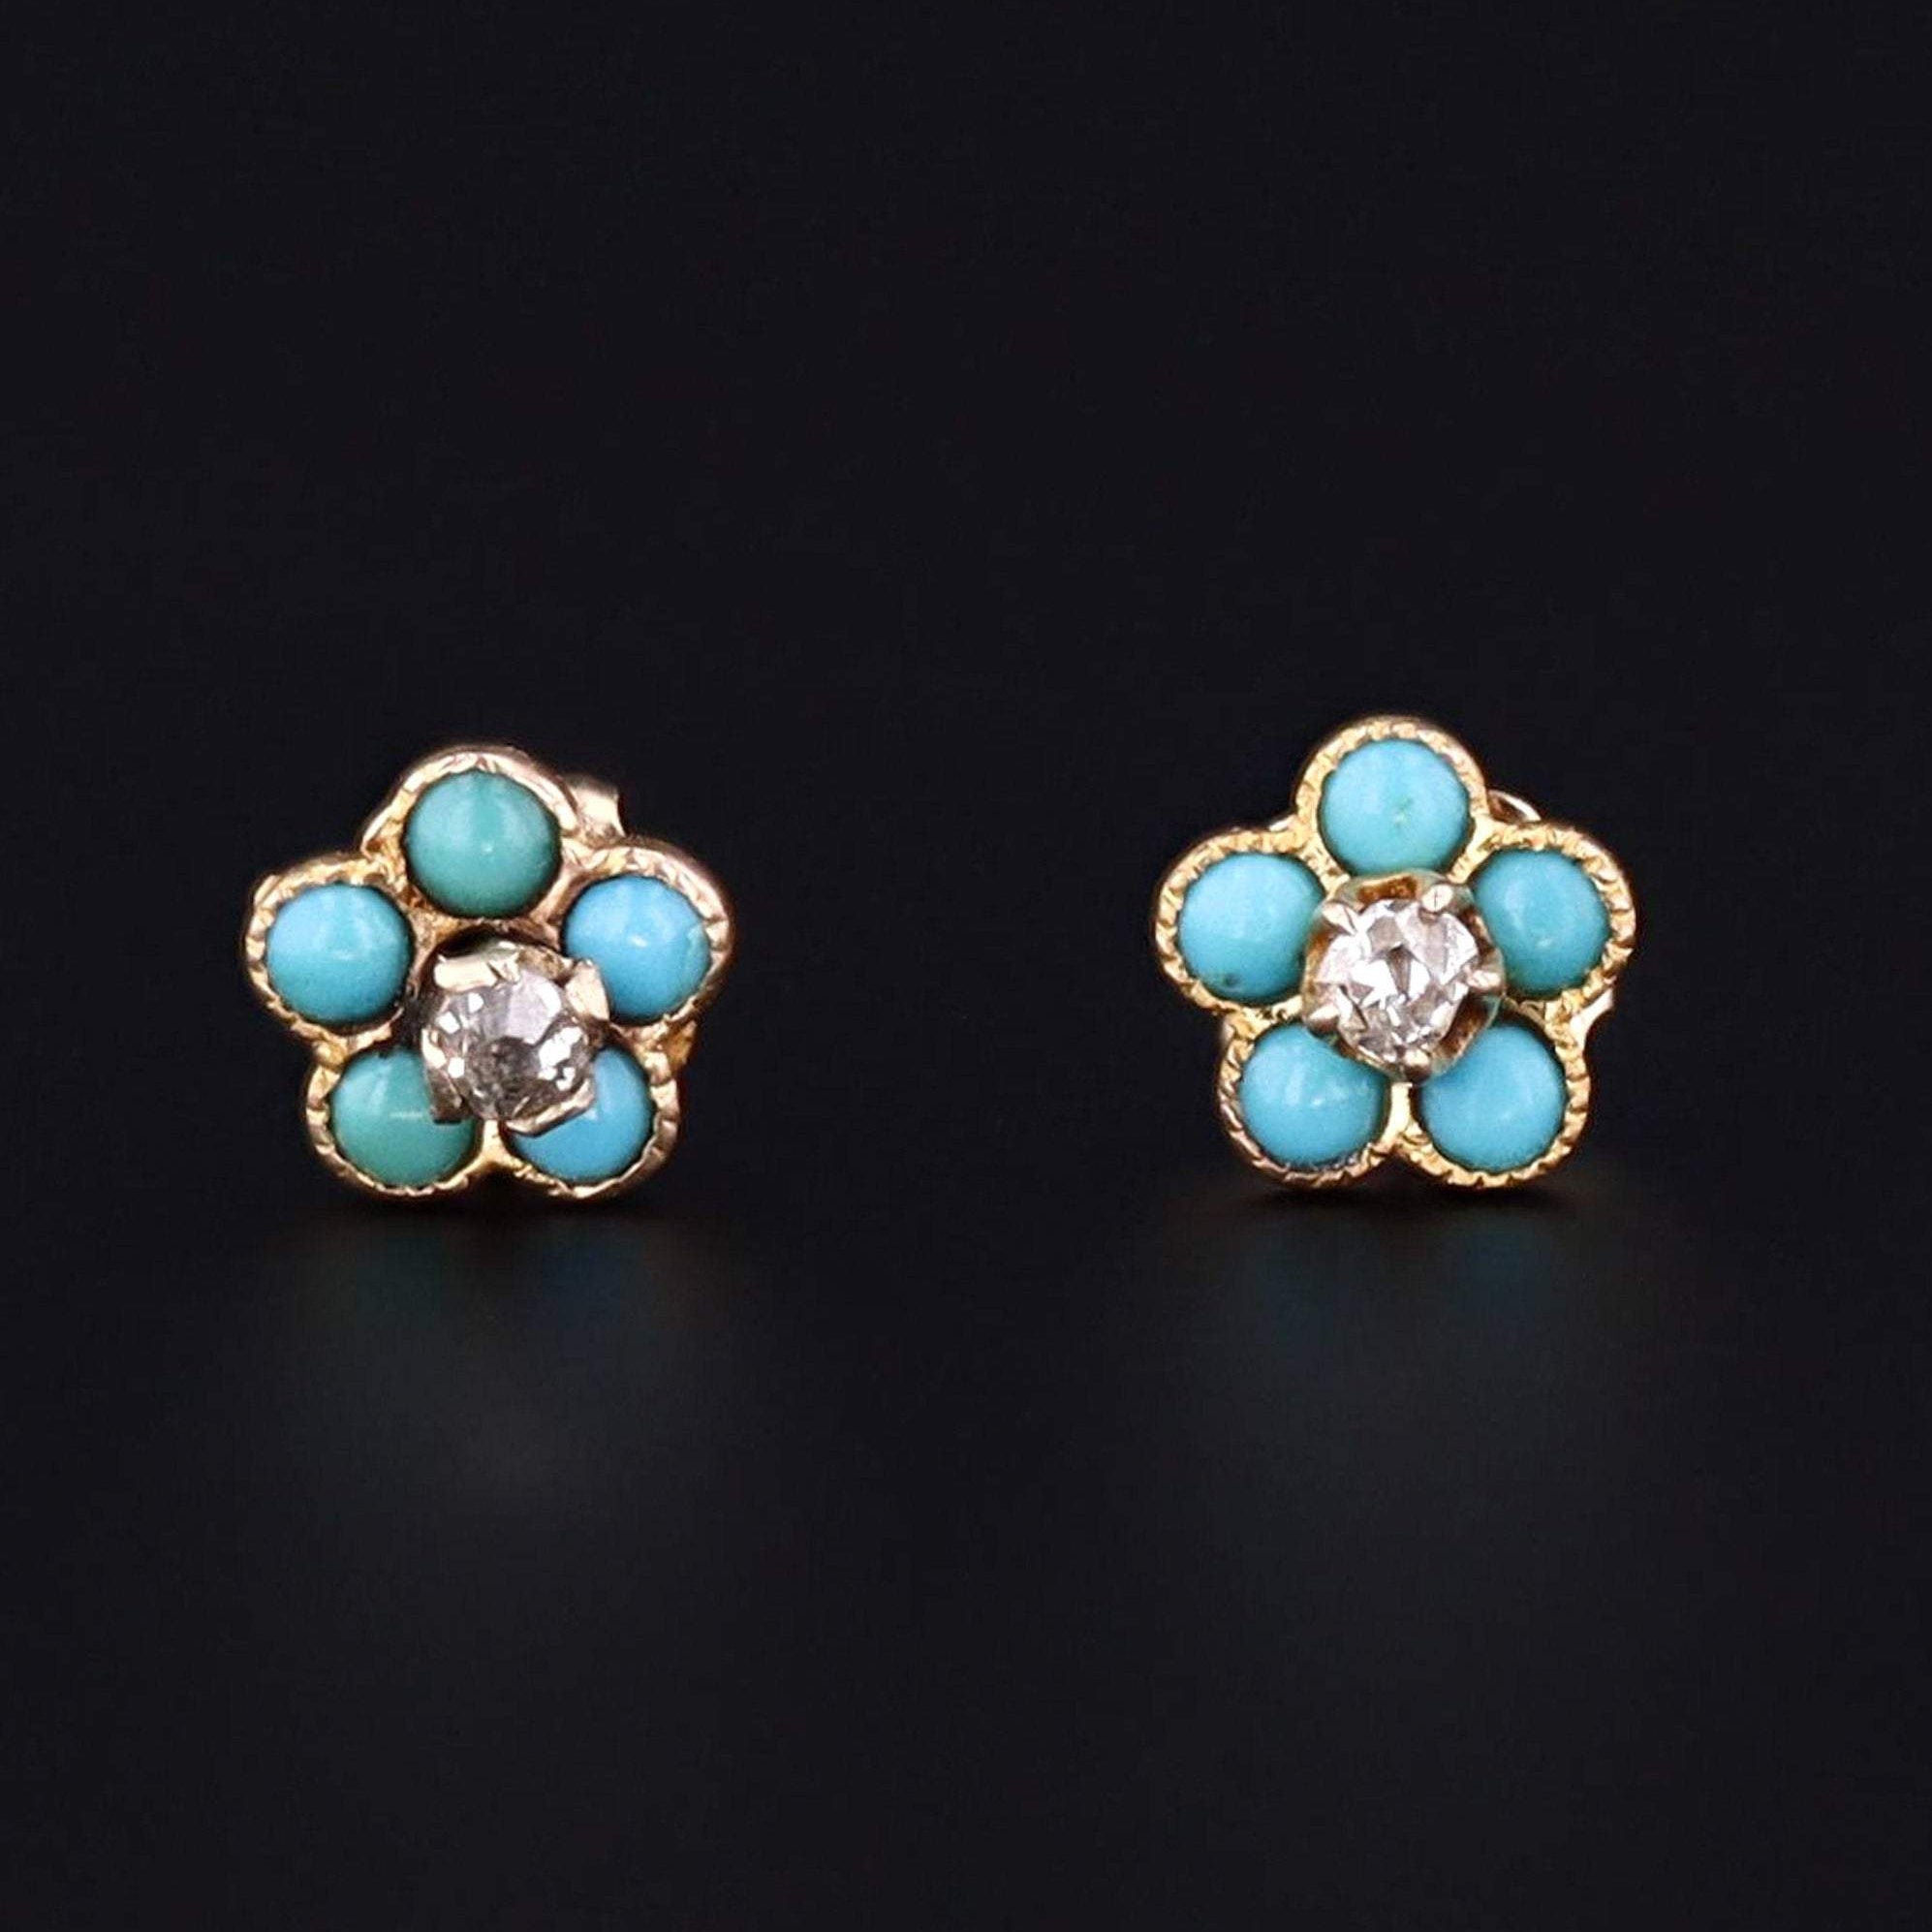 Turquoise & Diamond Flower Earrings | 14k Gold Earrings | Antique Pin Conversion Earrings | Forget-me-not Flower Earrings